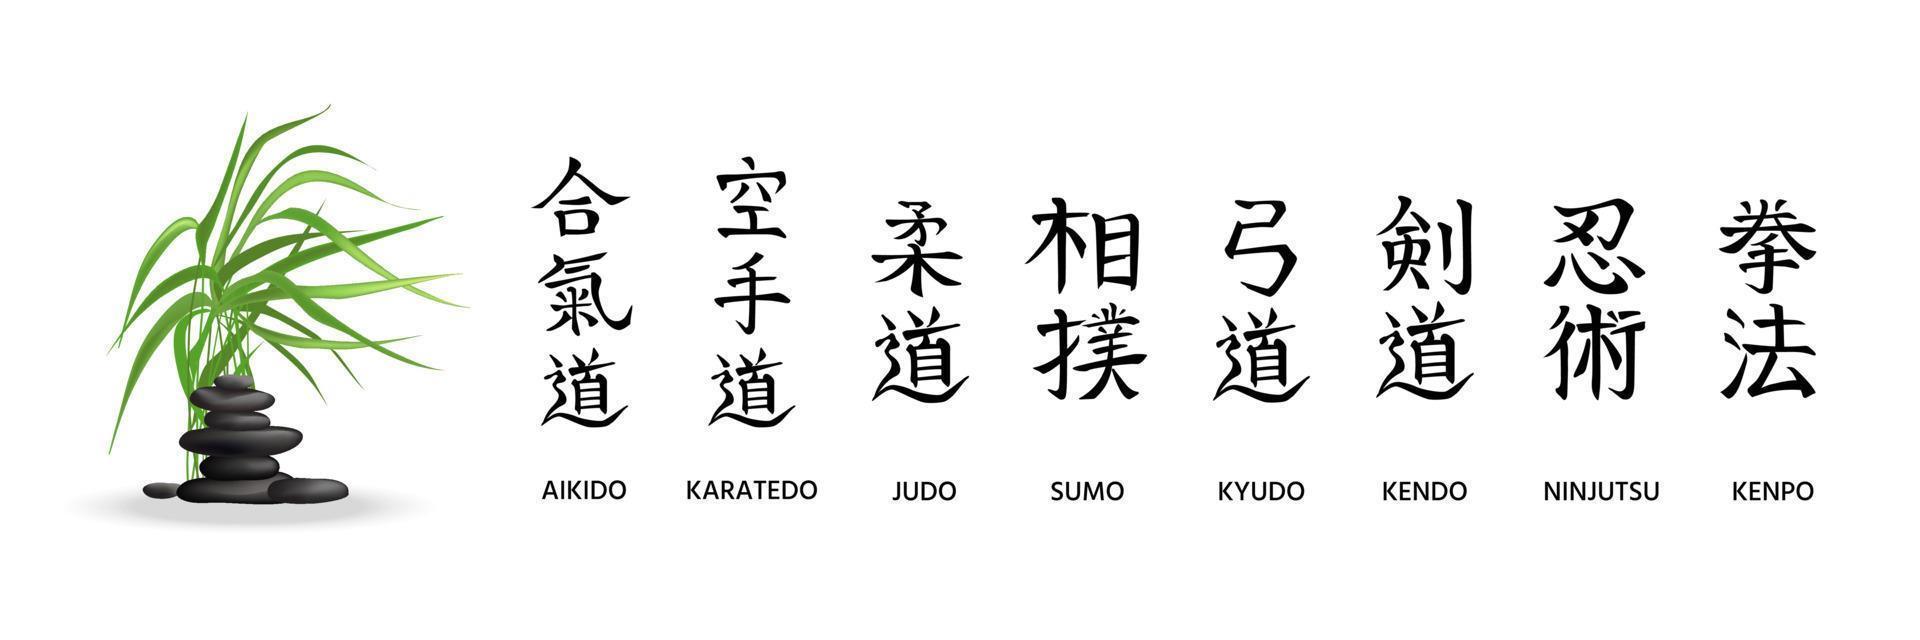 aikido, karatedo, judo, sumo, kyudo, kendo, ninjutsu, kenpo. nomes caligráficos de artes marciais japonesas, estilos de luta. torre de pedra de pedra zen japonesa e junco verde vetor